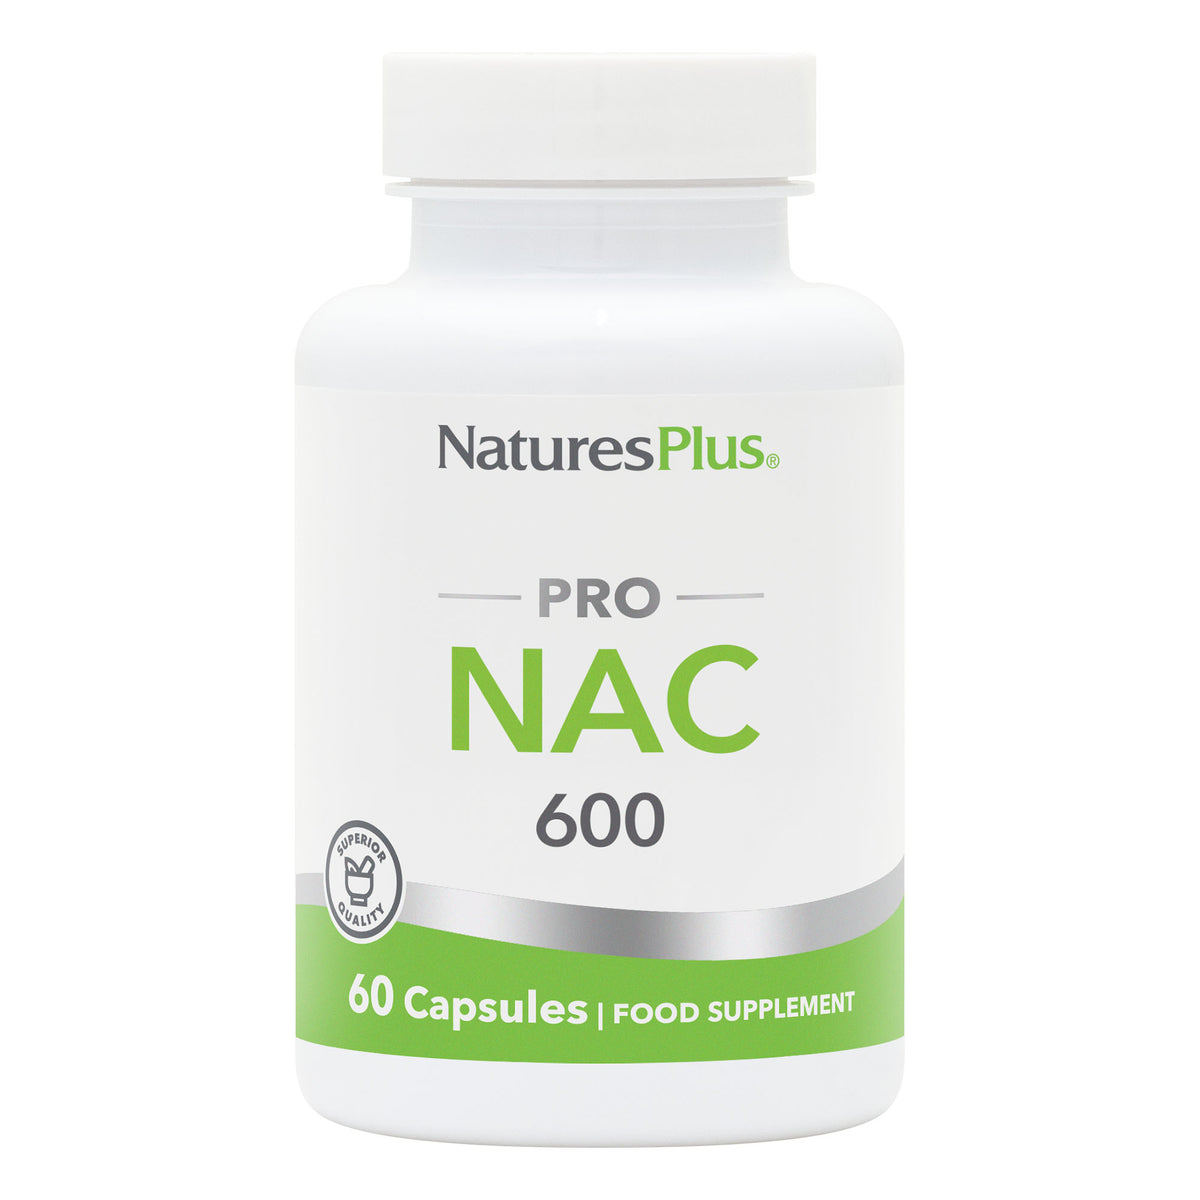 product image of NaturesPlus PRO NAC 600 MG containing NaturesPlus PRO NAC 600 MG